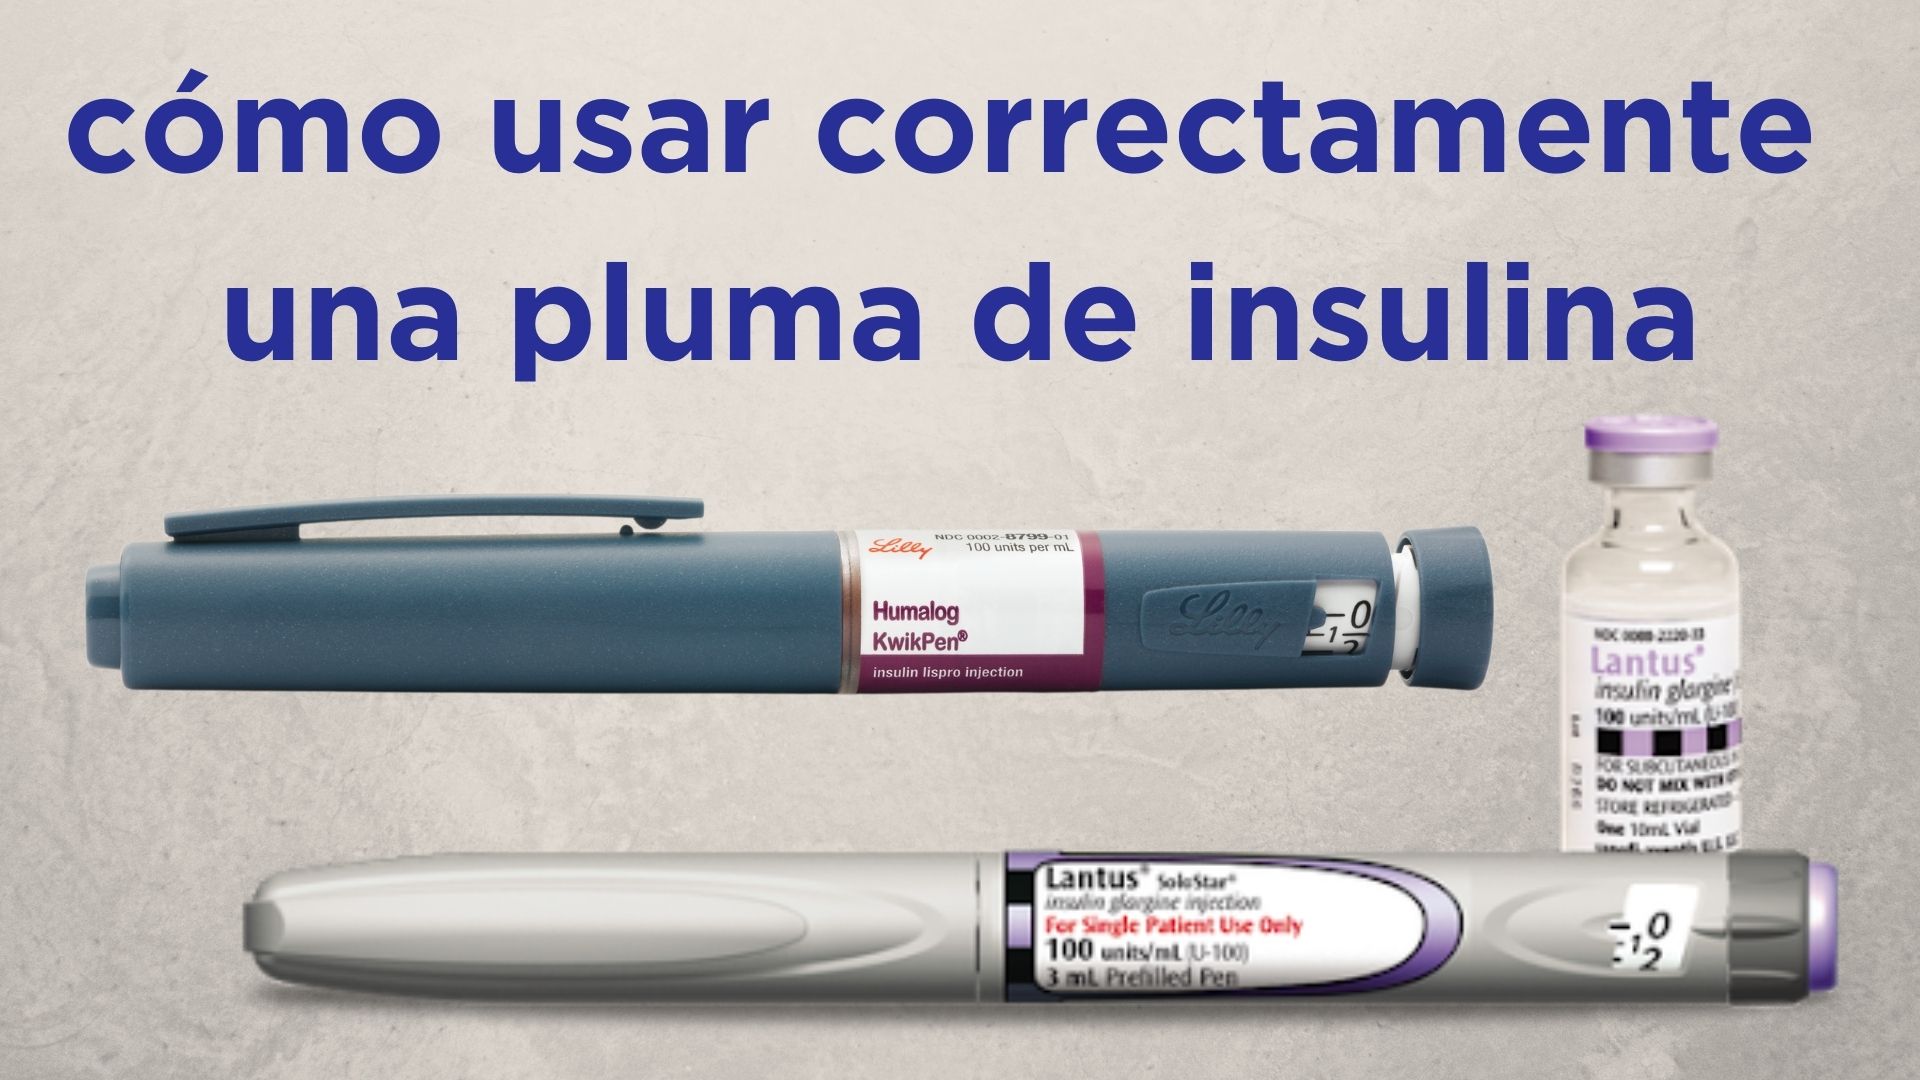 Insulin Pen How To in Spanish